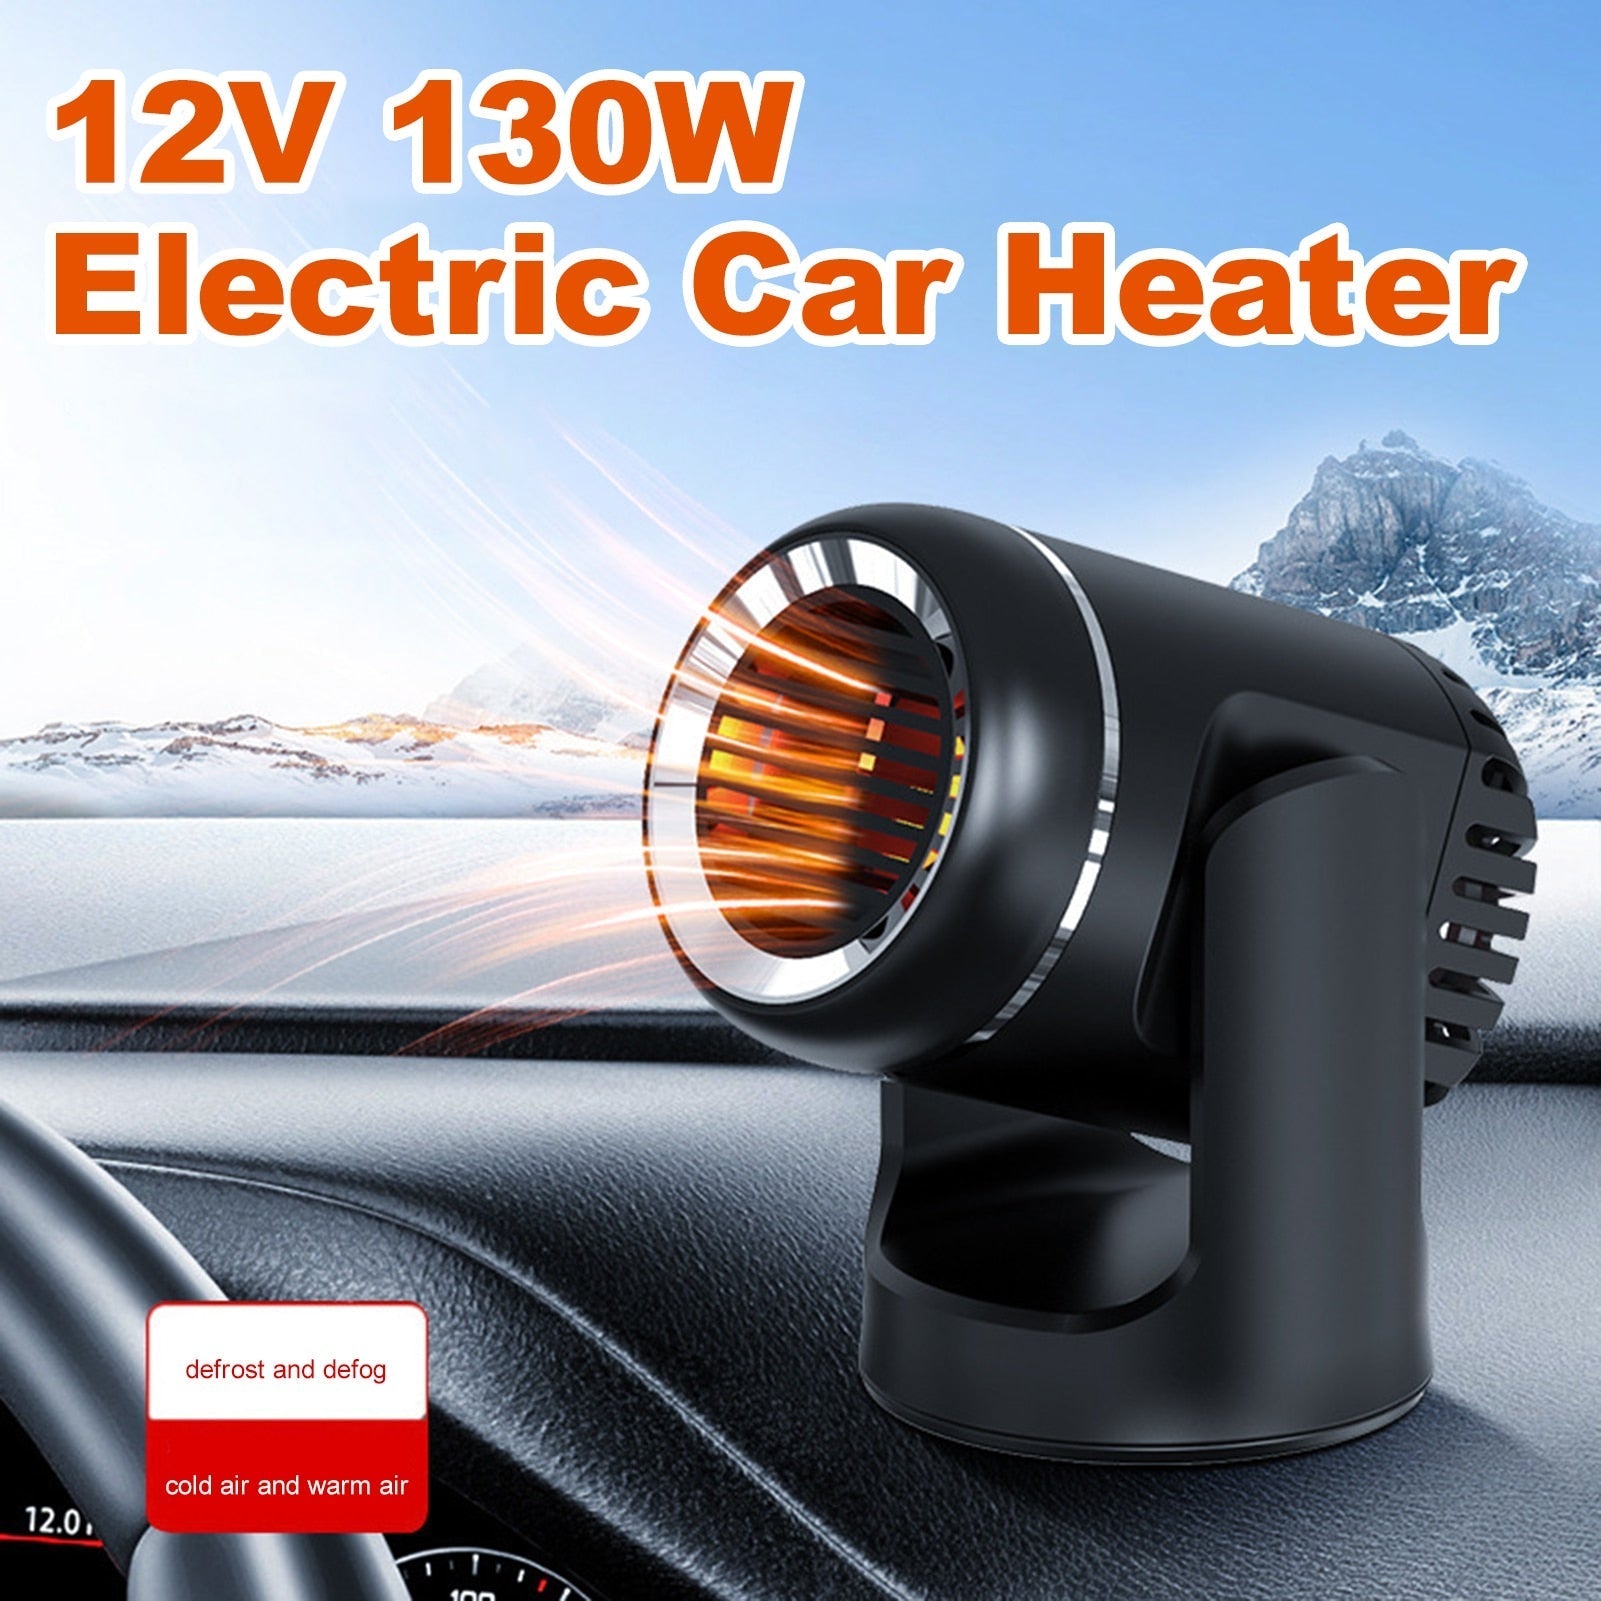 12V 130W Electric Heater For Car Portable Fast Heating Fan Heater Windshield Dryer Defogging Demister Defroster Low Noise